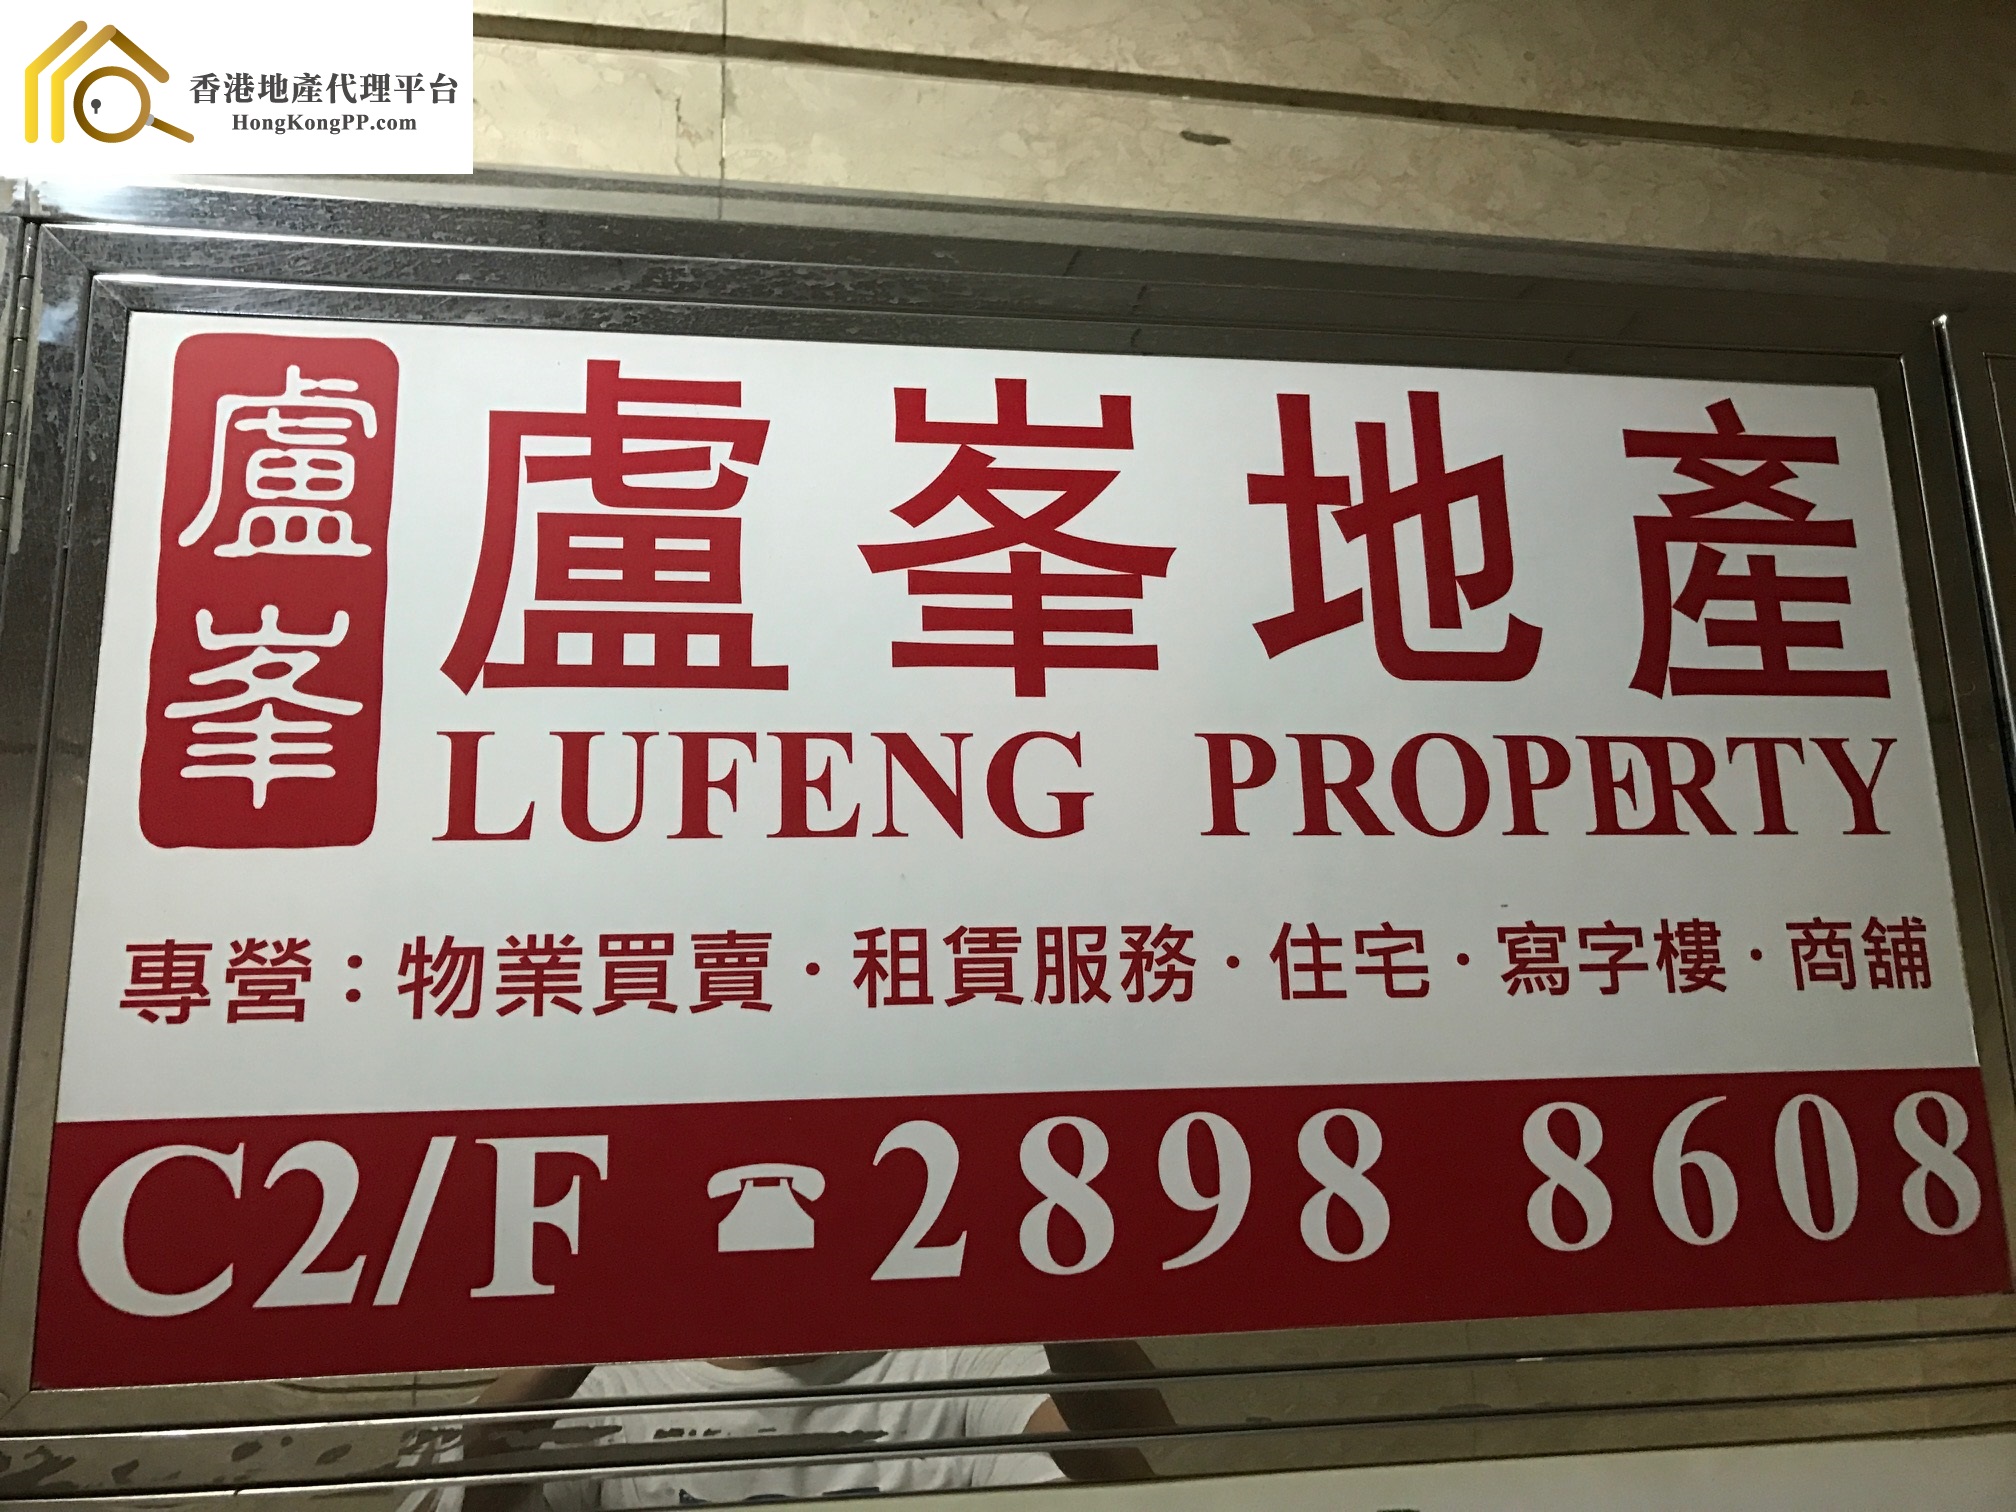 CarparkEstate Agent: 盧峯地產 Lufeng Property